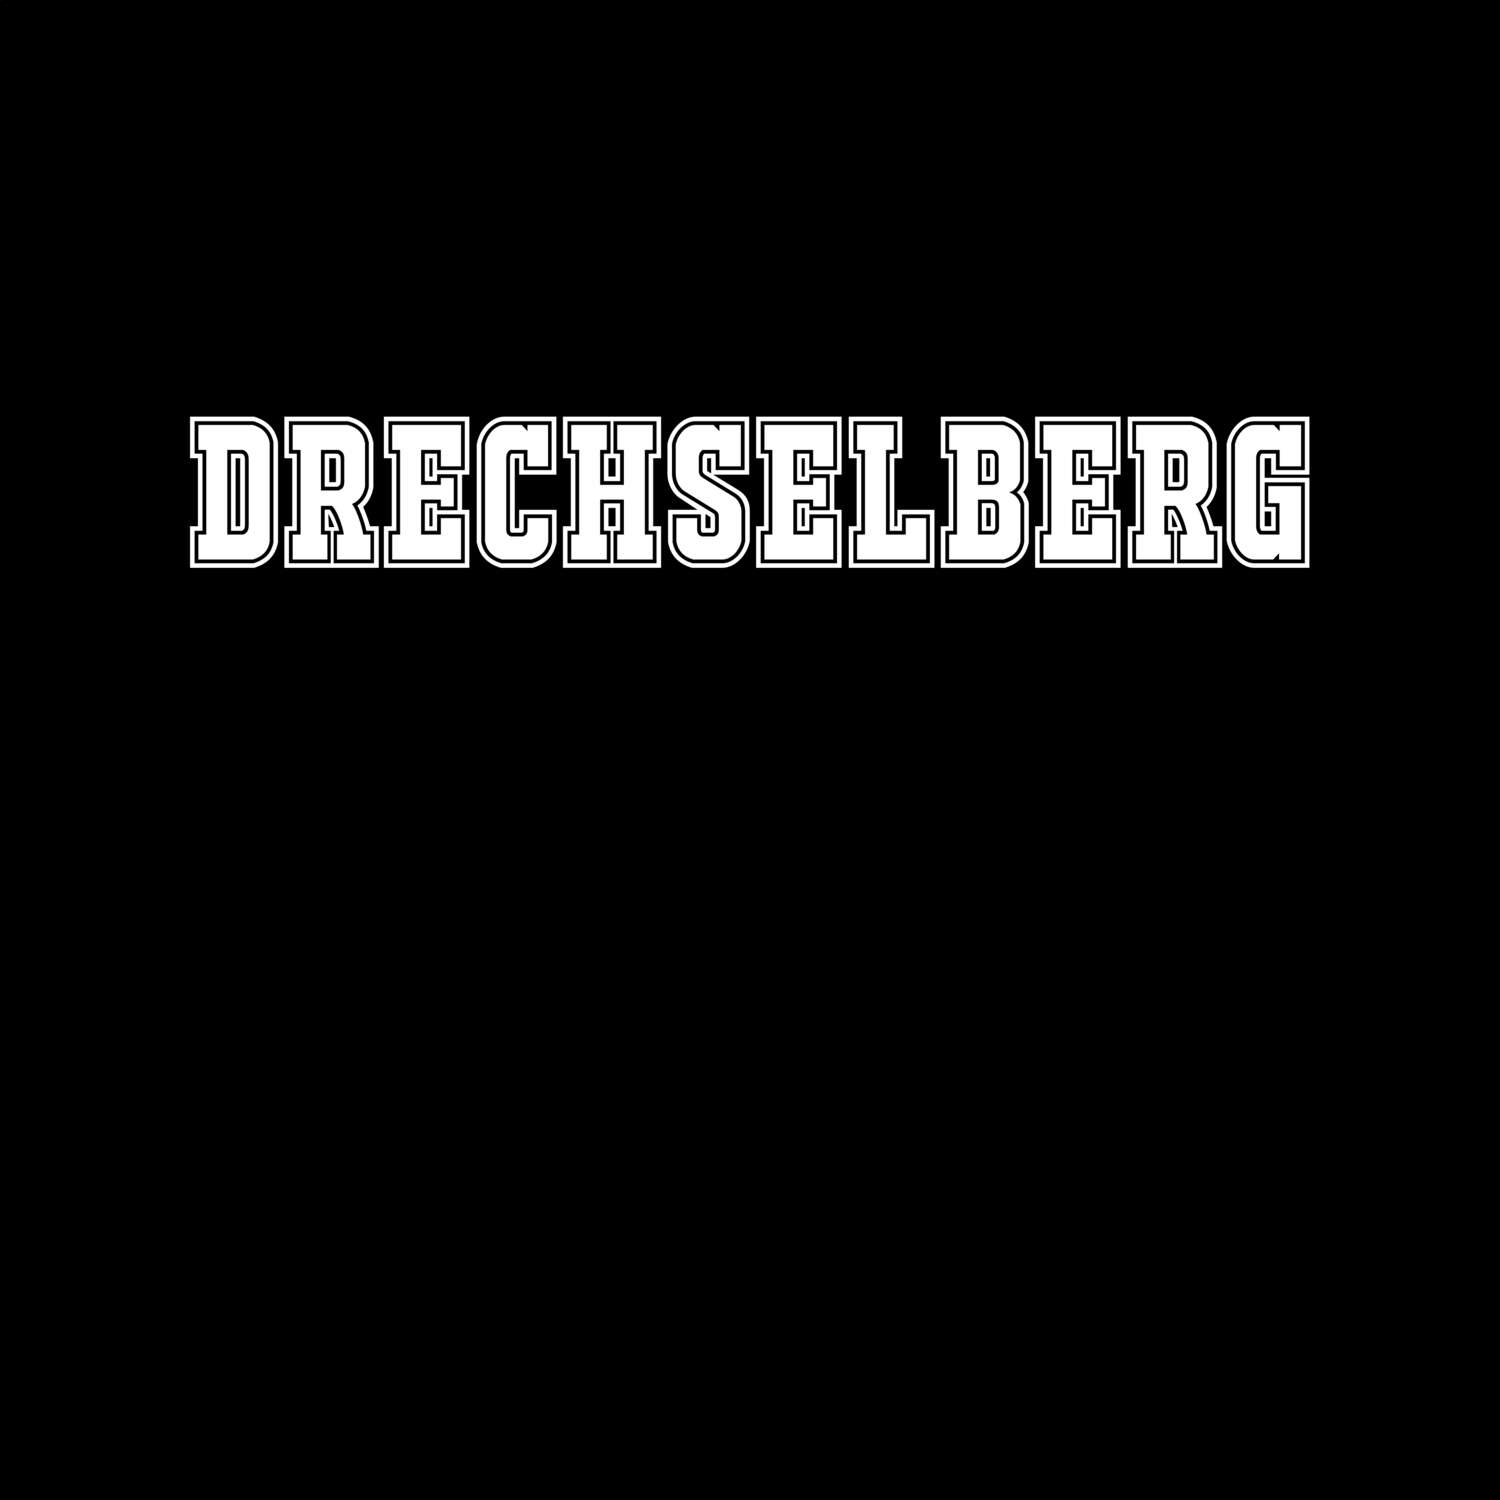 Drechselberg T-Shirt »Classic«